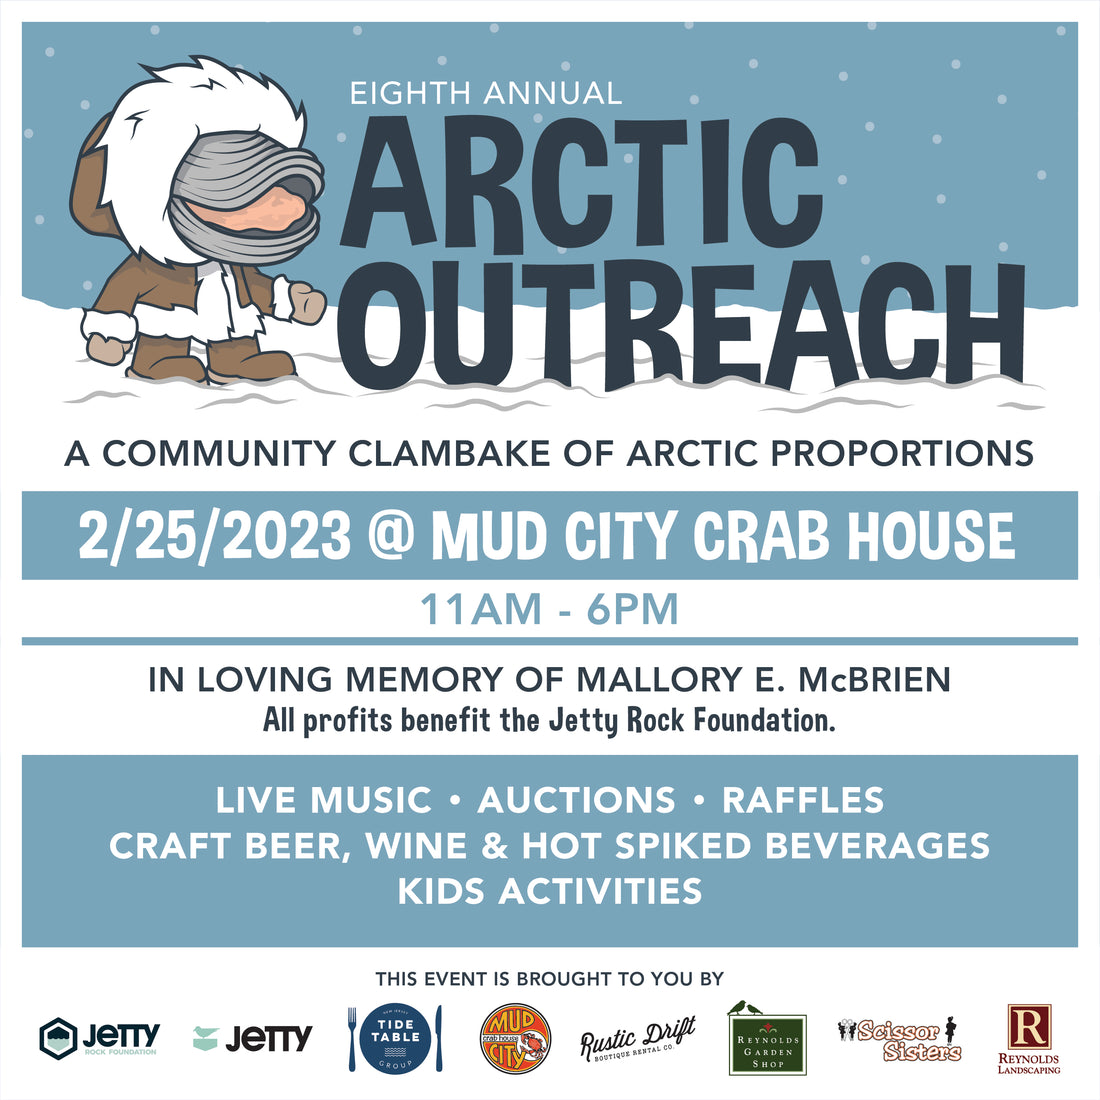 8th Annual Arctic Outreach slated for 2/25/23!